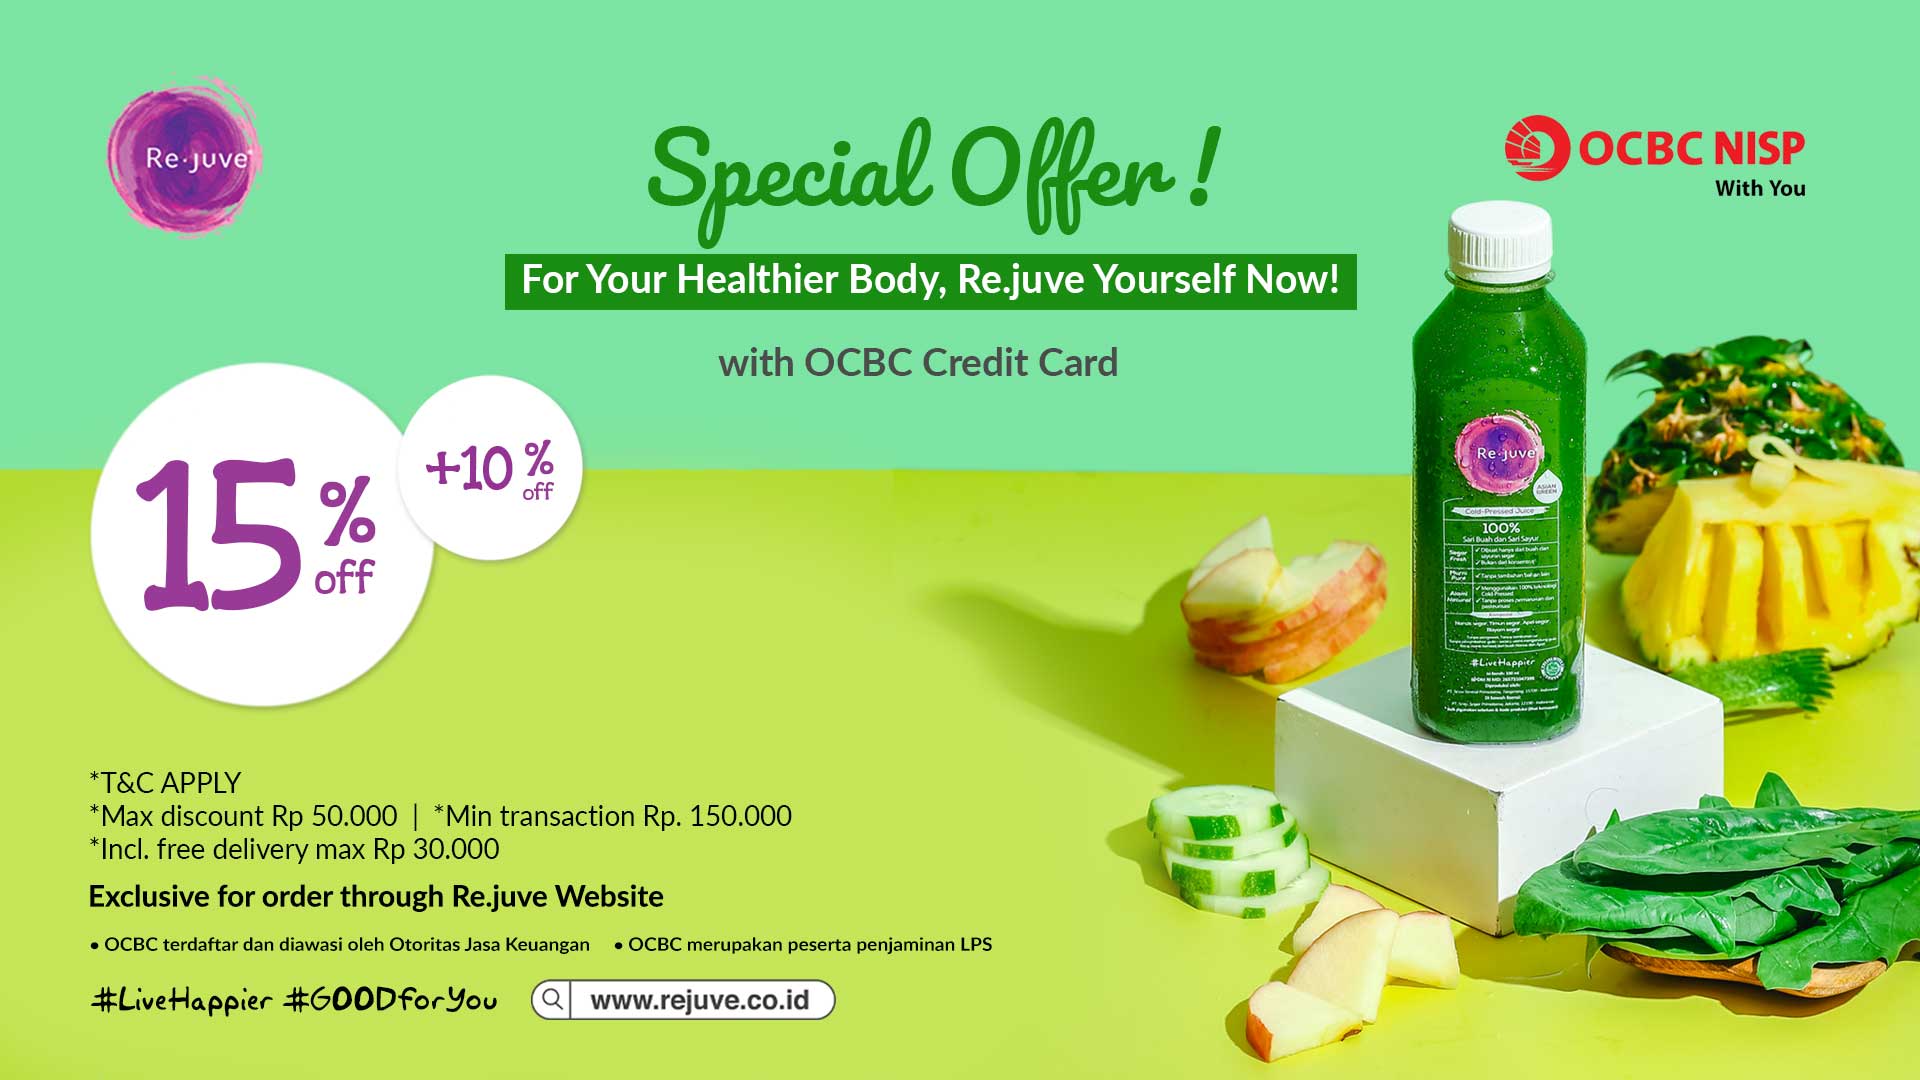 ocbc special offer feb 22